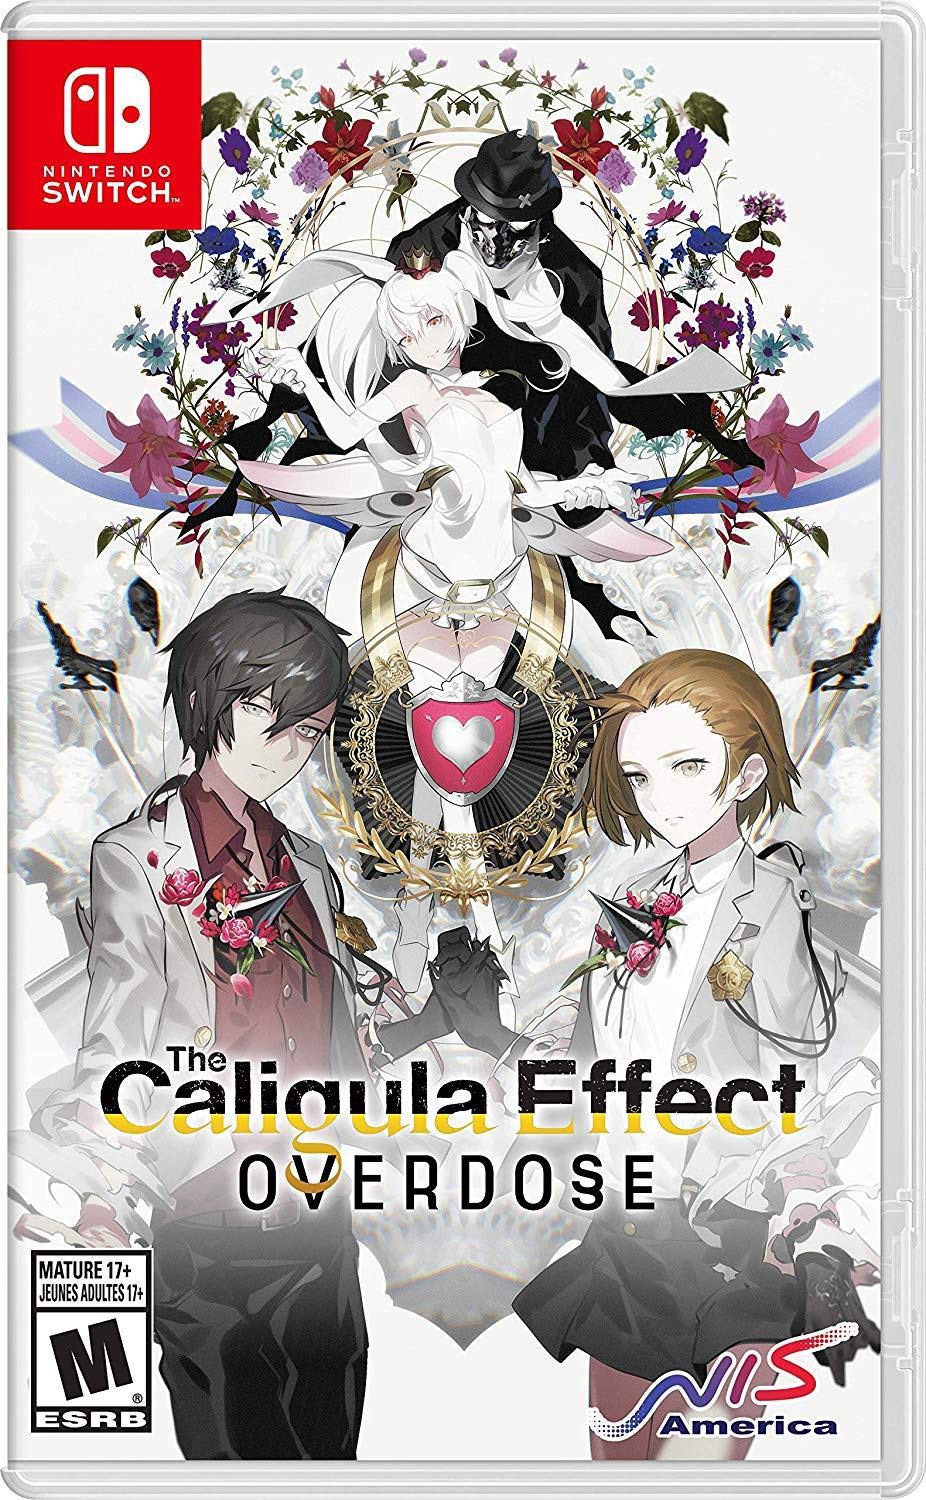 Caligula Effect Overdose and Caligula Effect 2 - PRE-ORDERS CLOSED